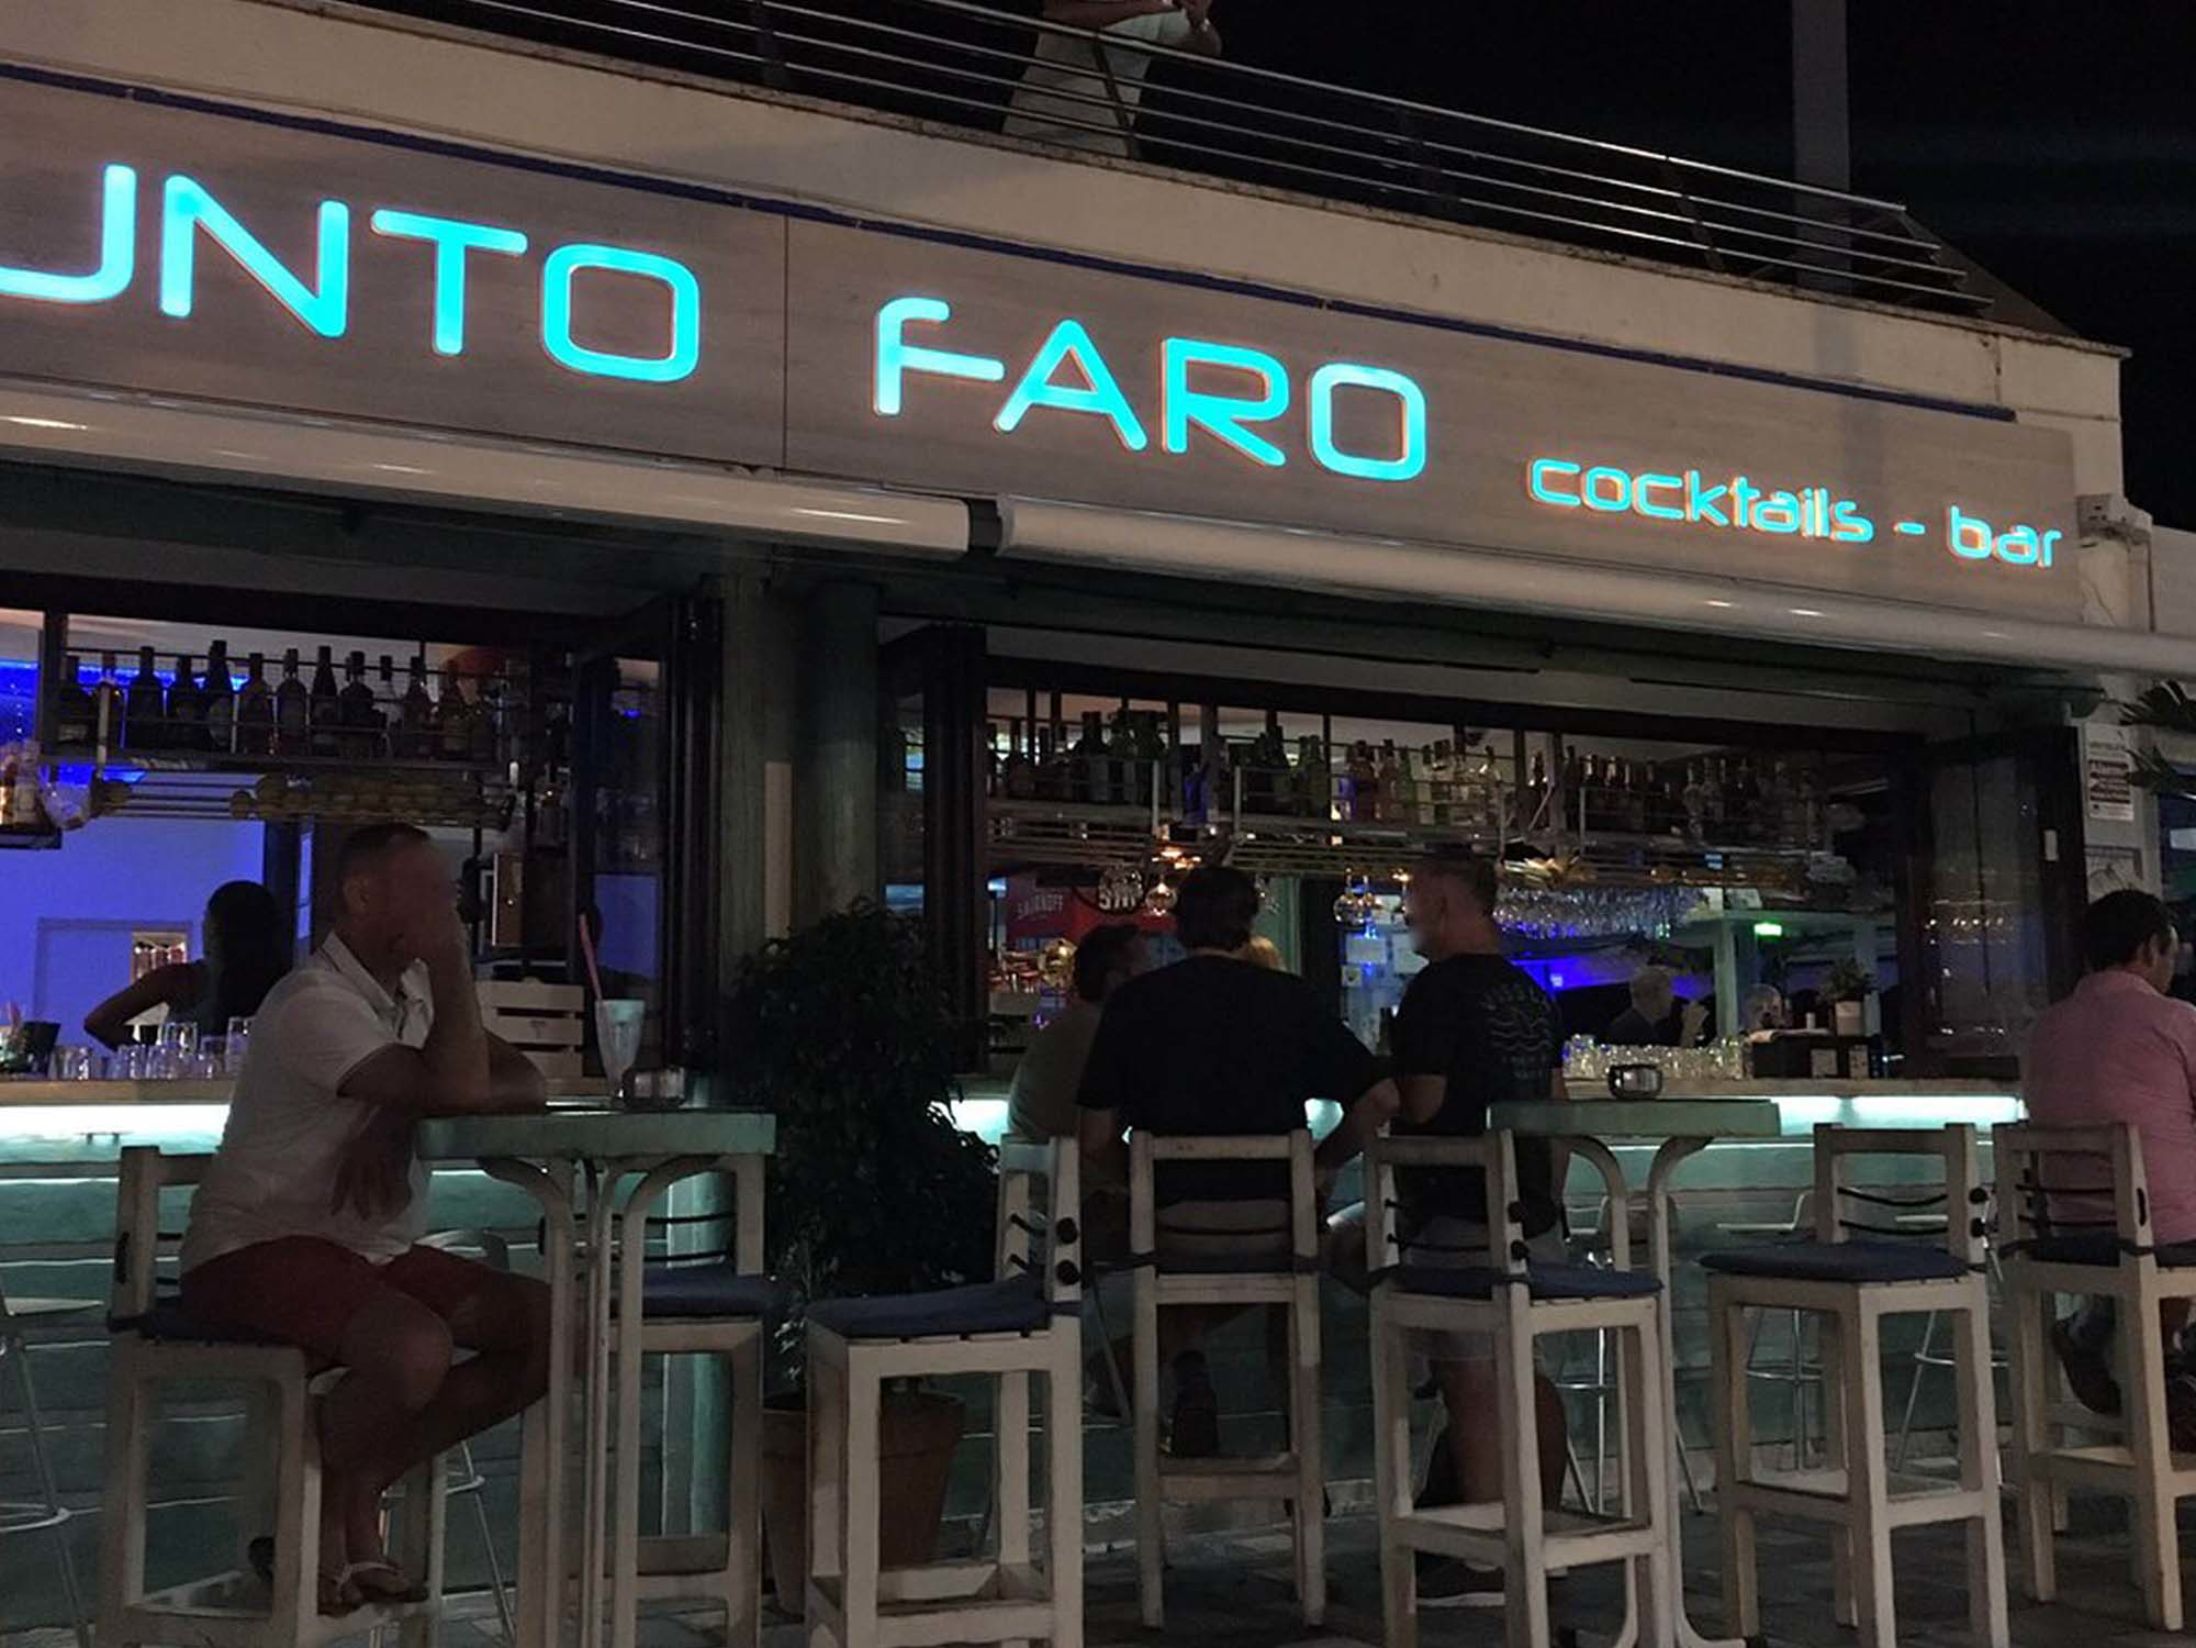 Best Bars in Marbella - Punto Faro